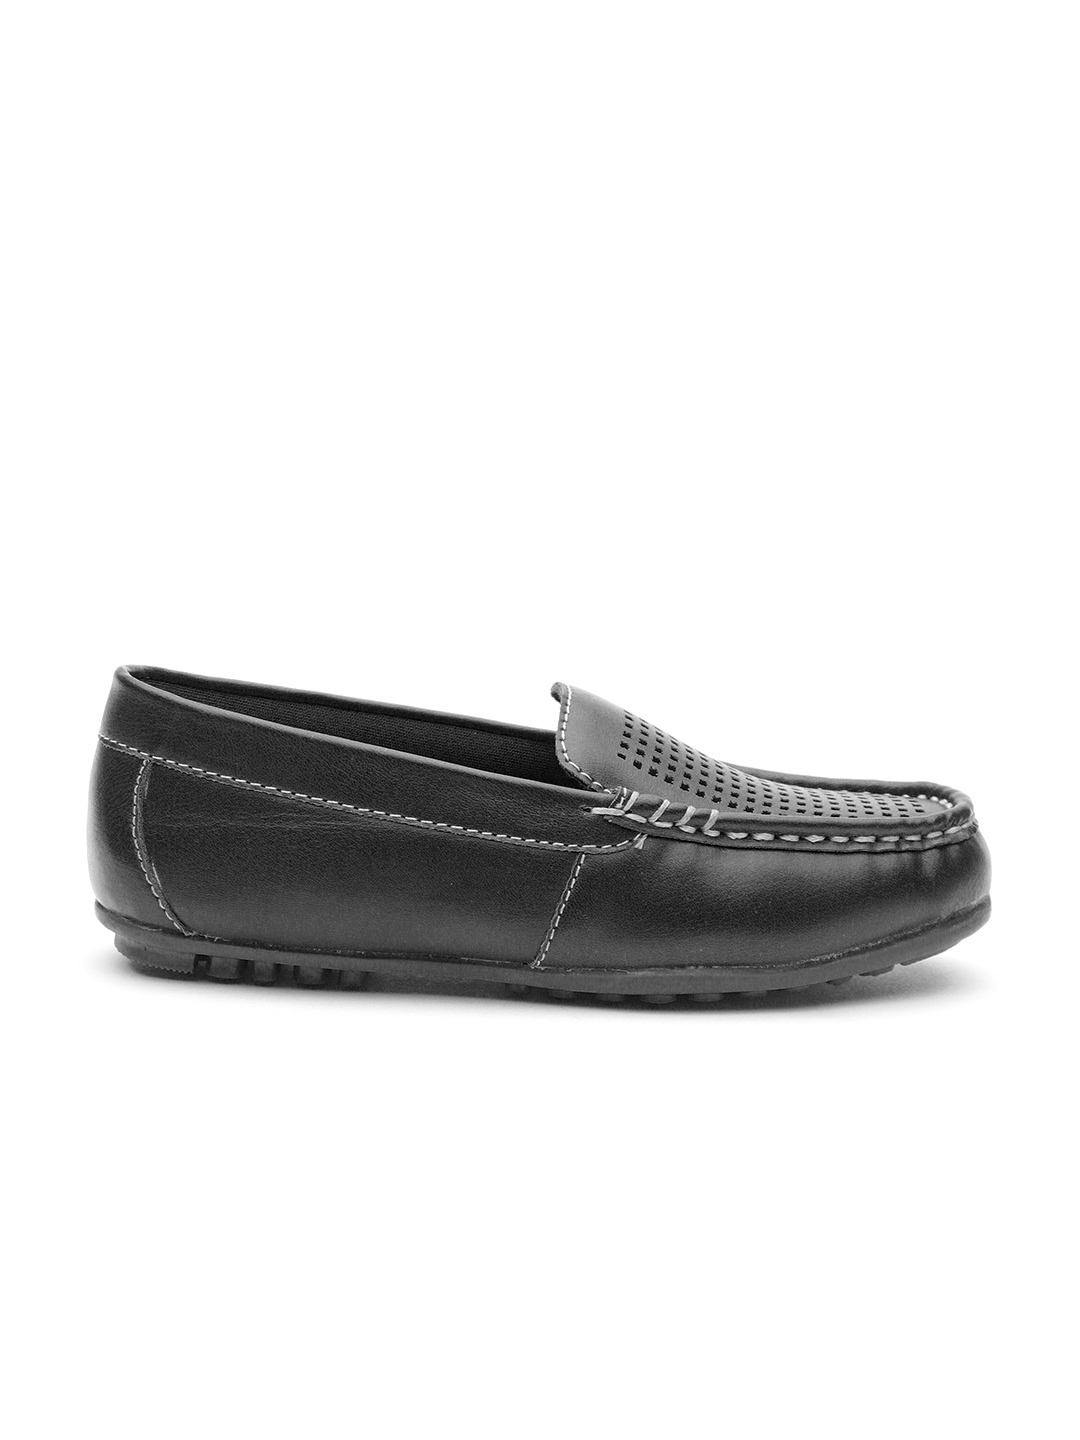 carlton london black loafers